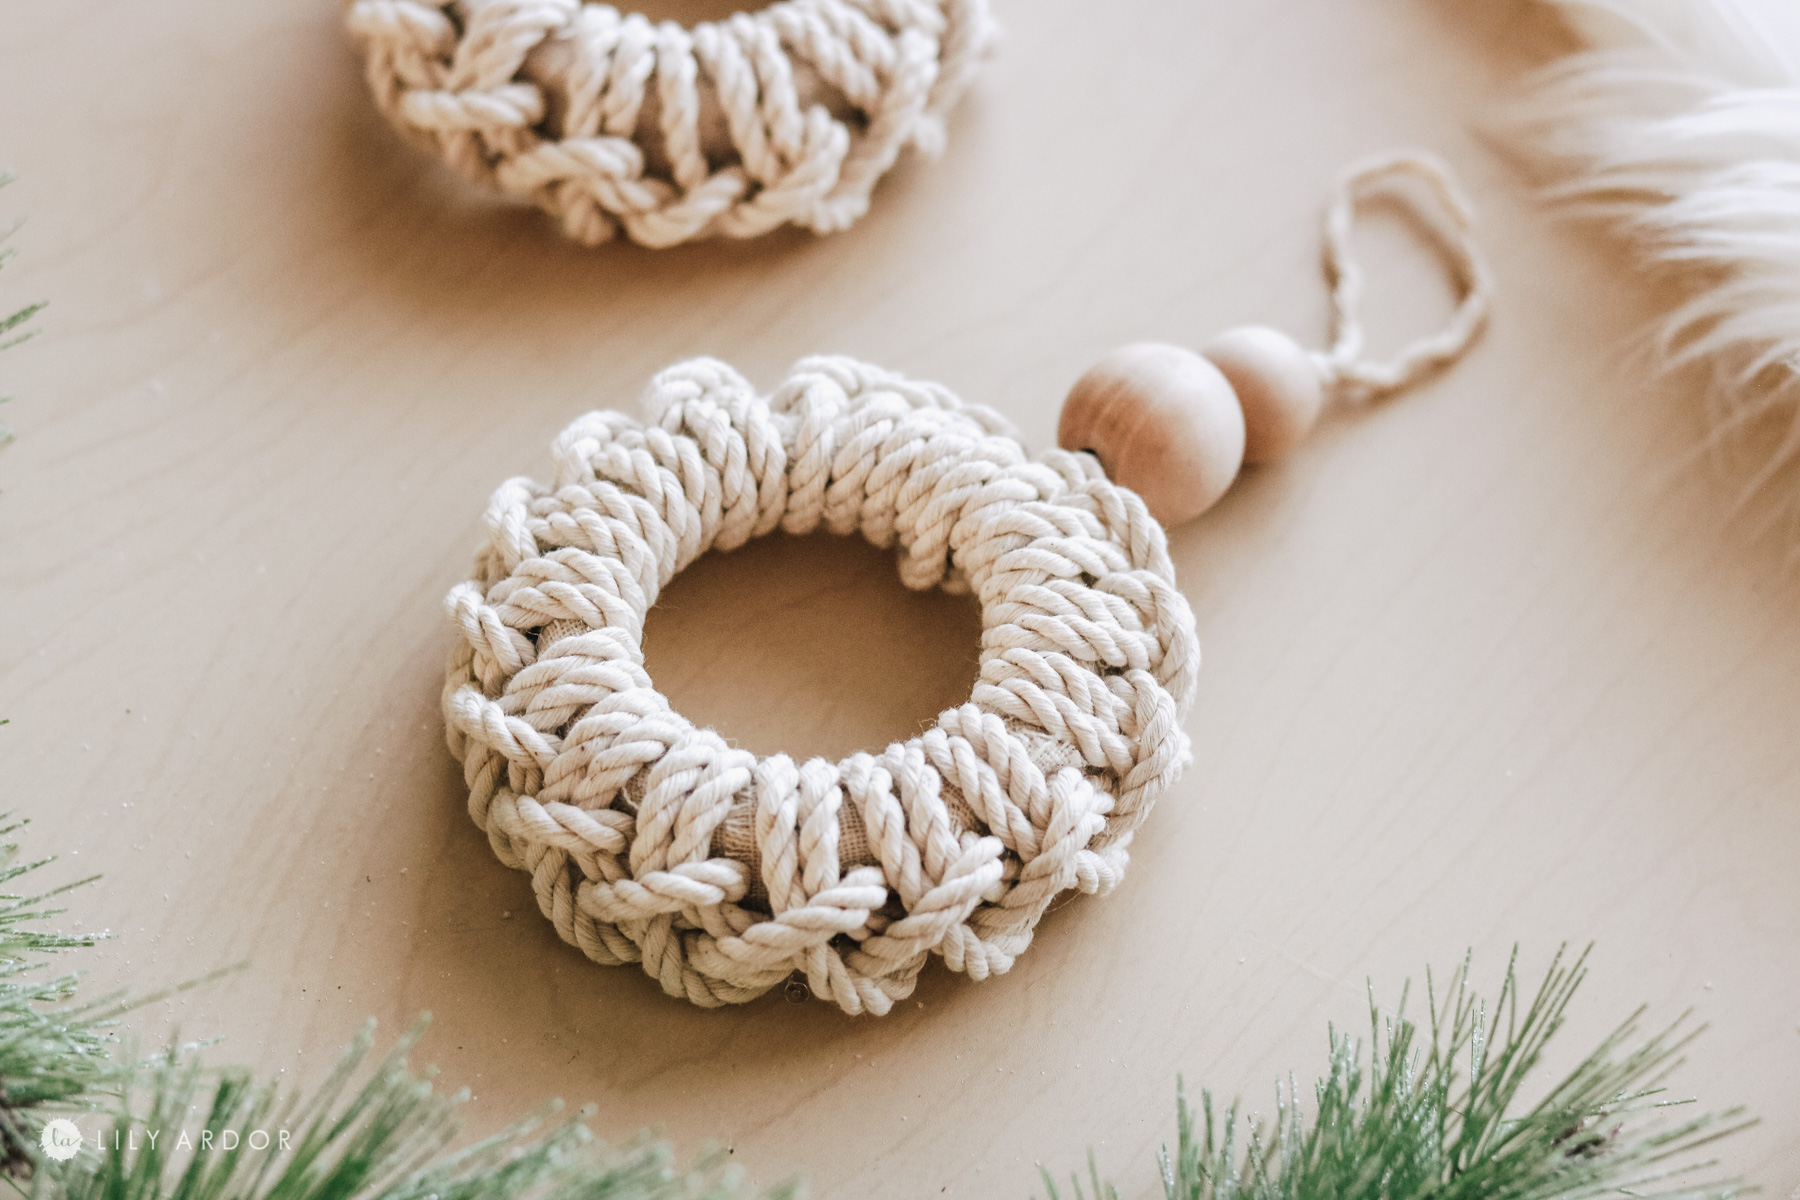 Macrame Christmas wreath ornament - A Wonderful Thought